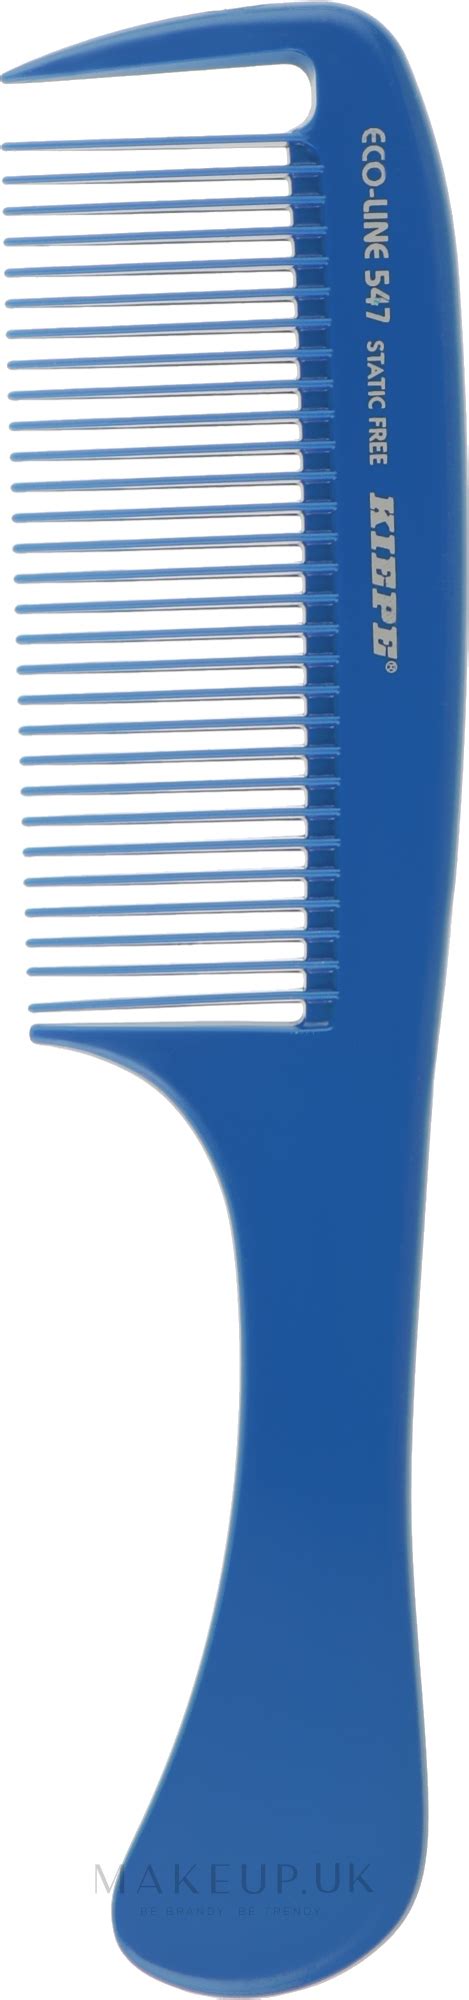 Kiepe Eco Line Static Free Brush Comb With Handle Makeup Uk